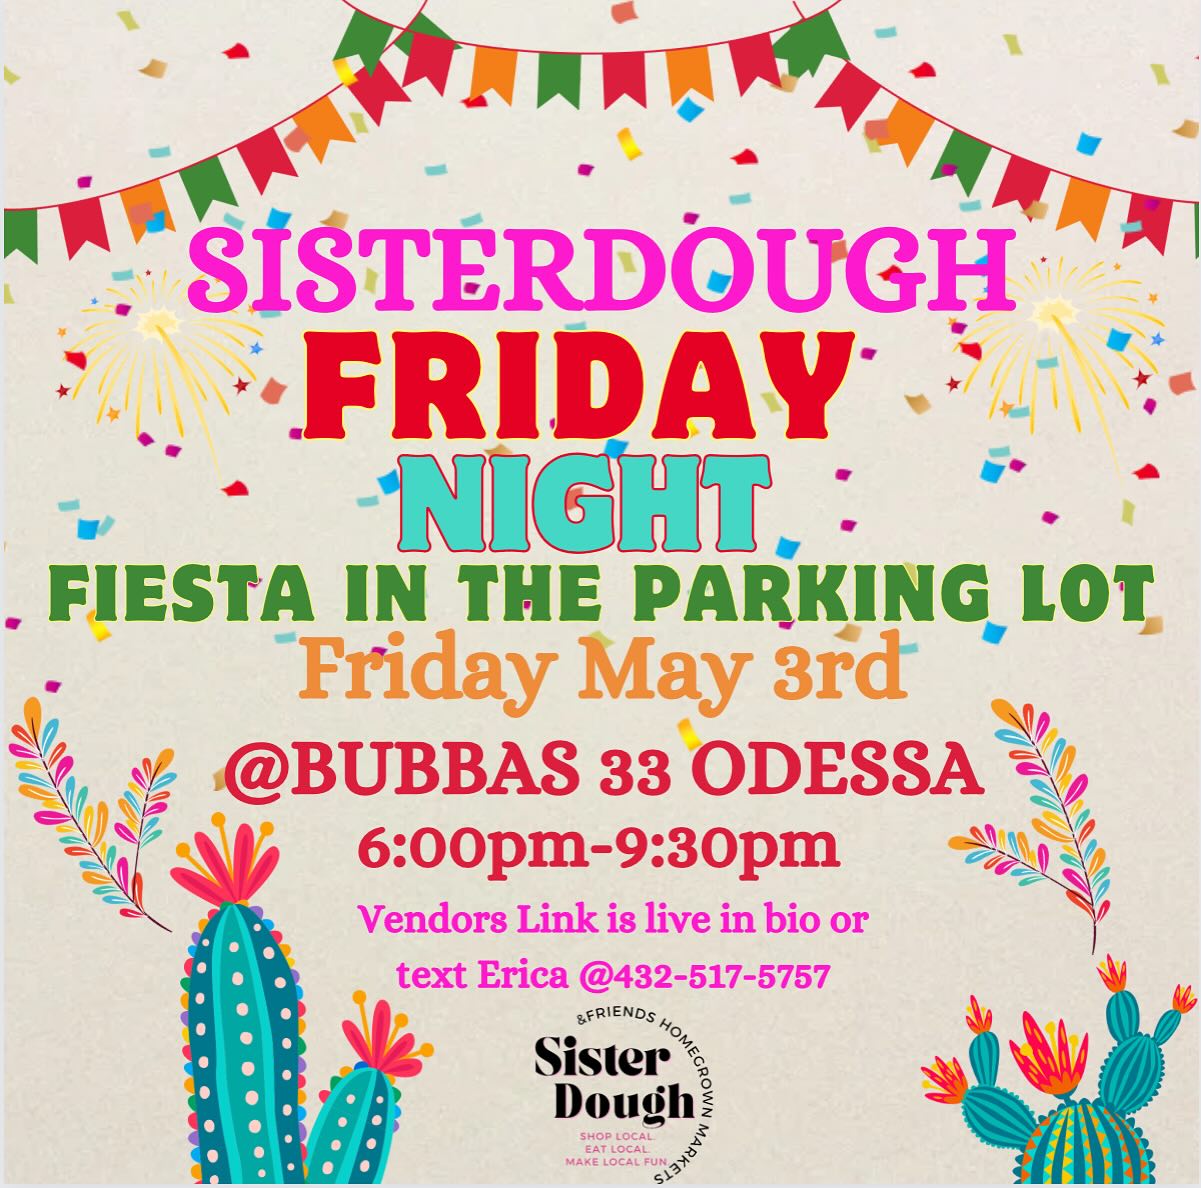 Sisterdough Friday Night Market